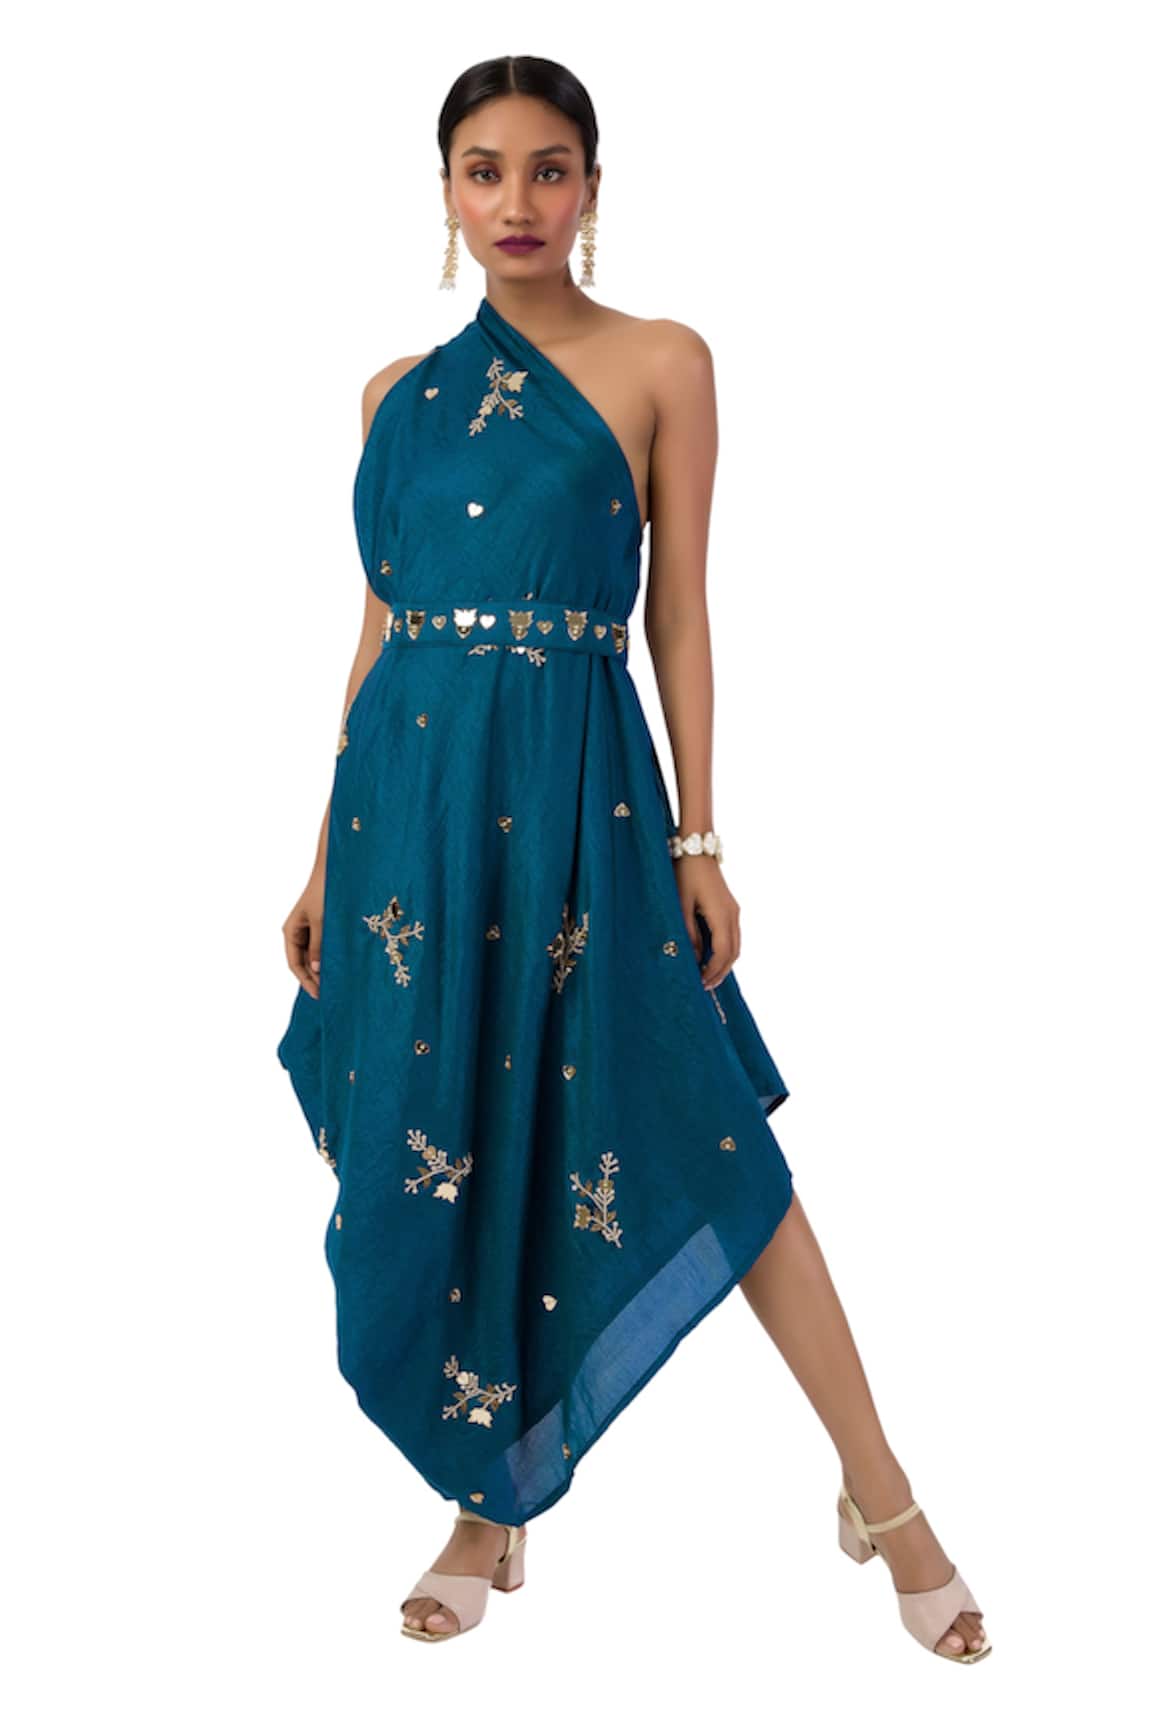 Meghna shah One Shoulder Draped Dress